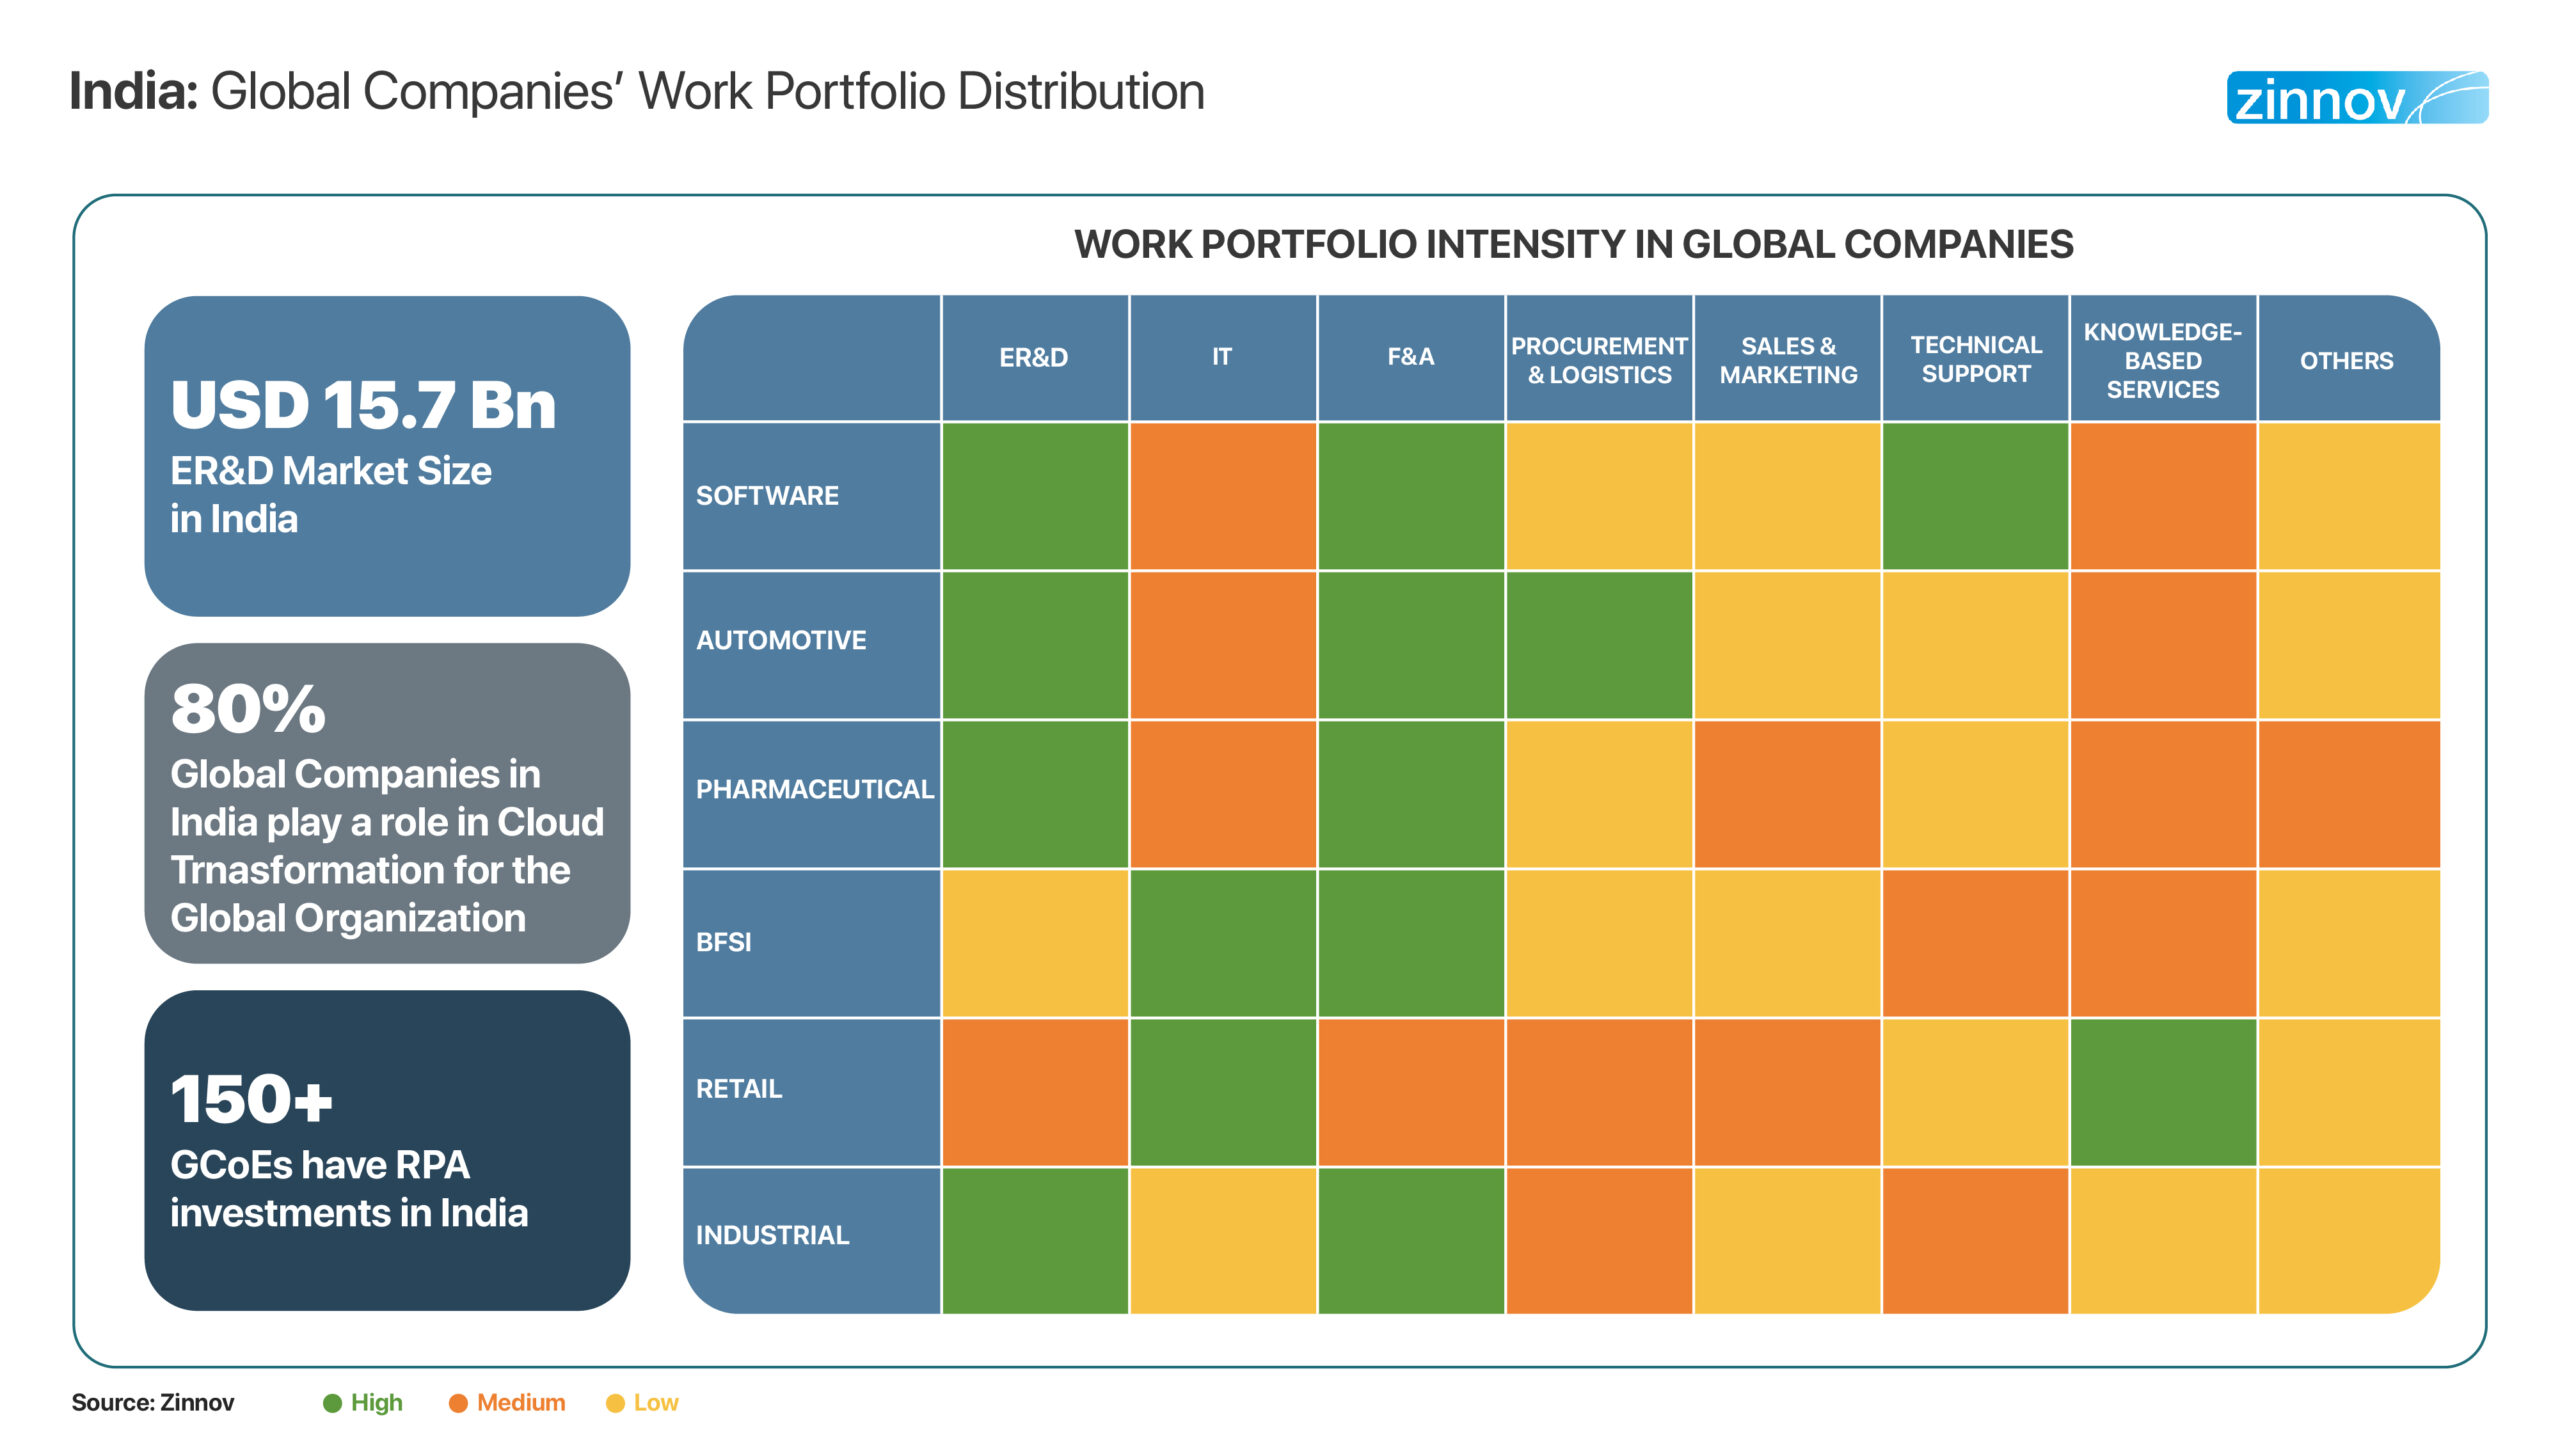 Work portfolio intensity in global companies 